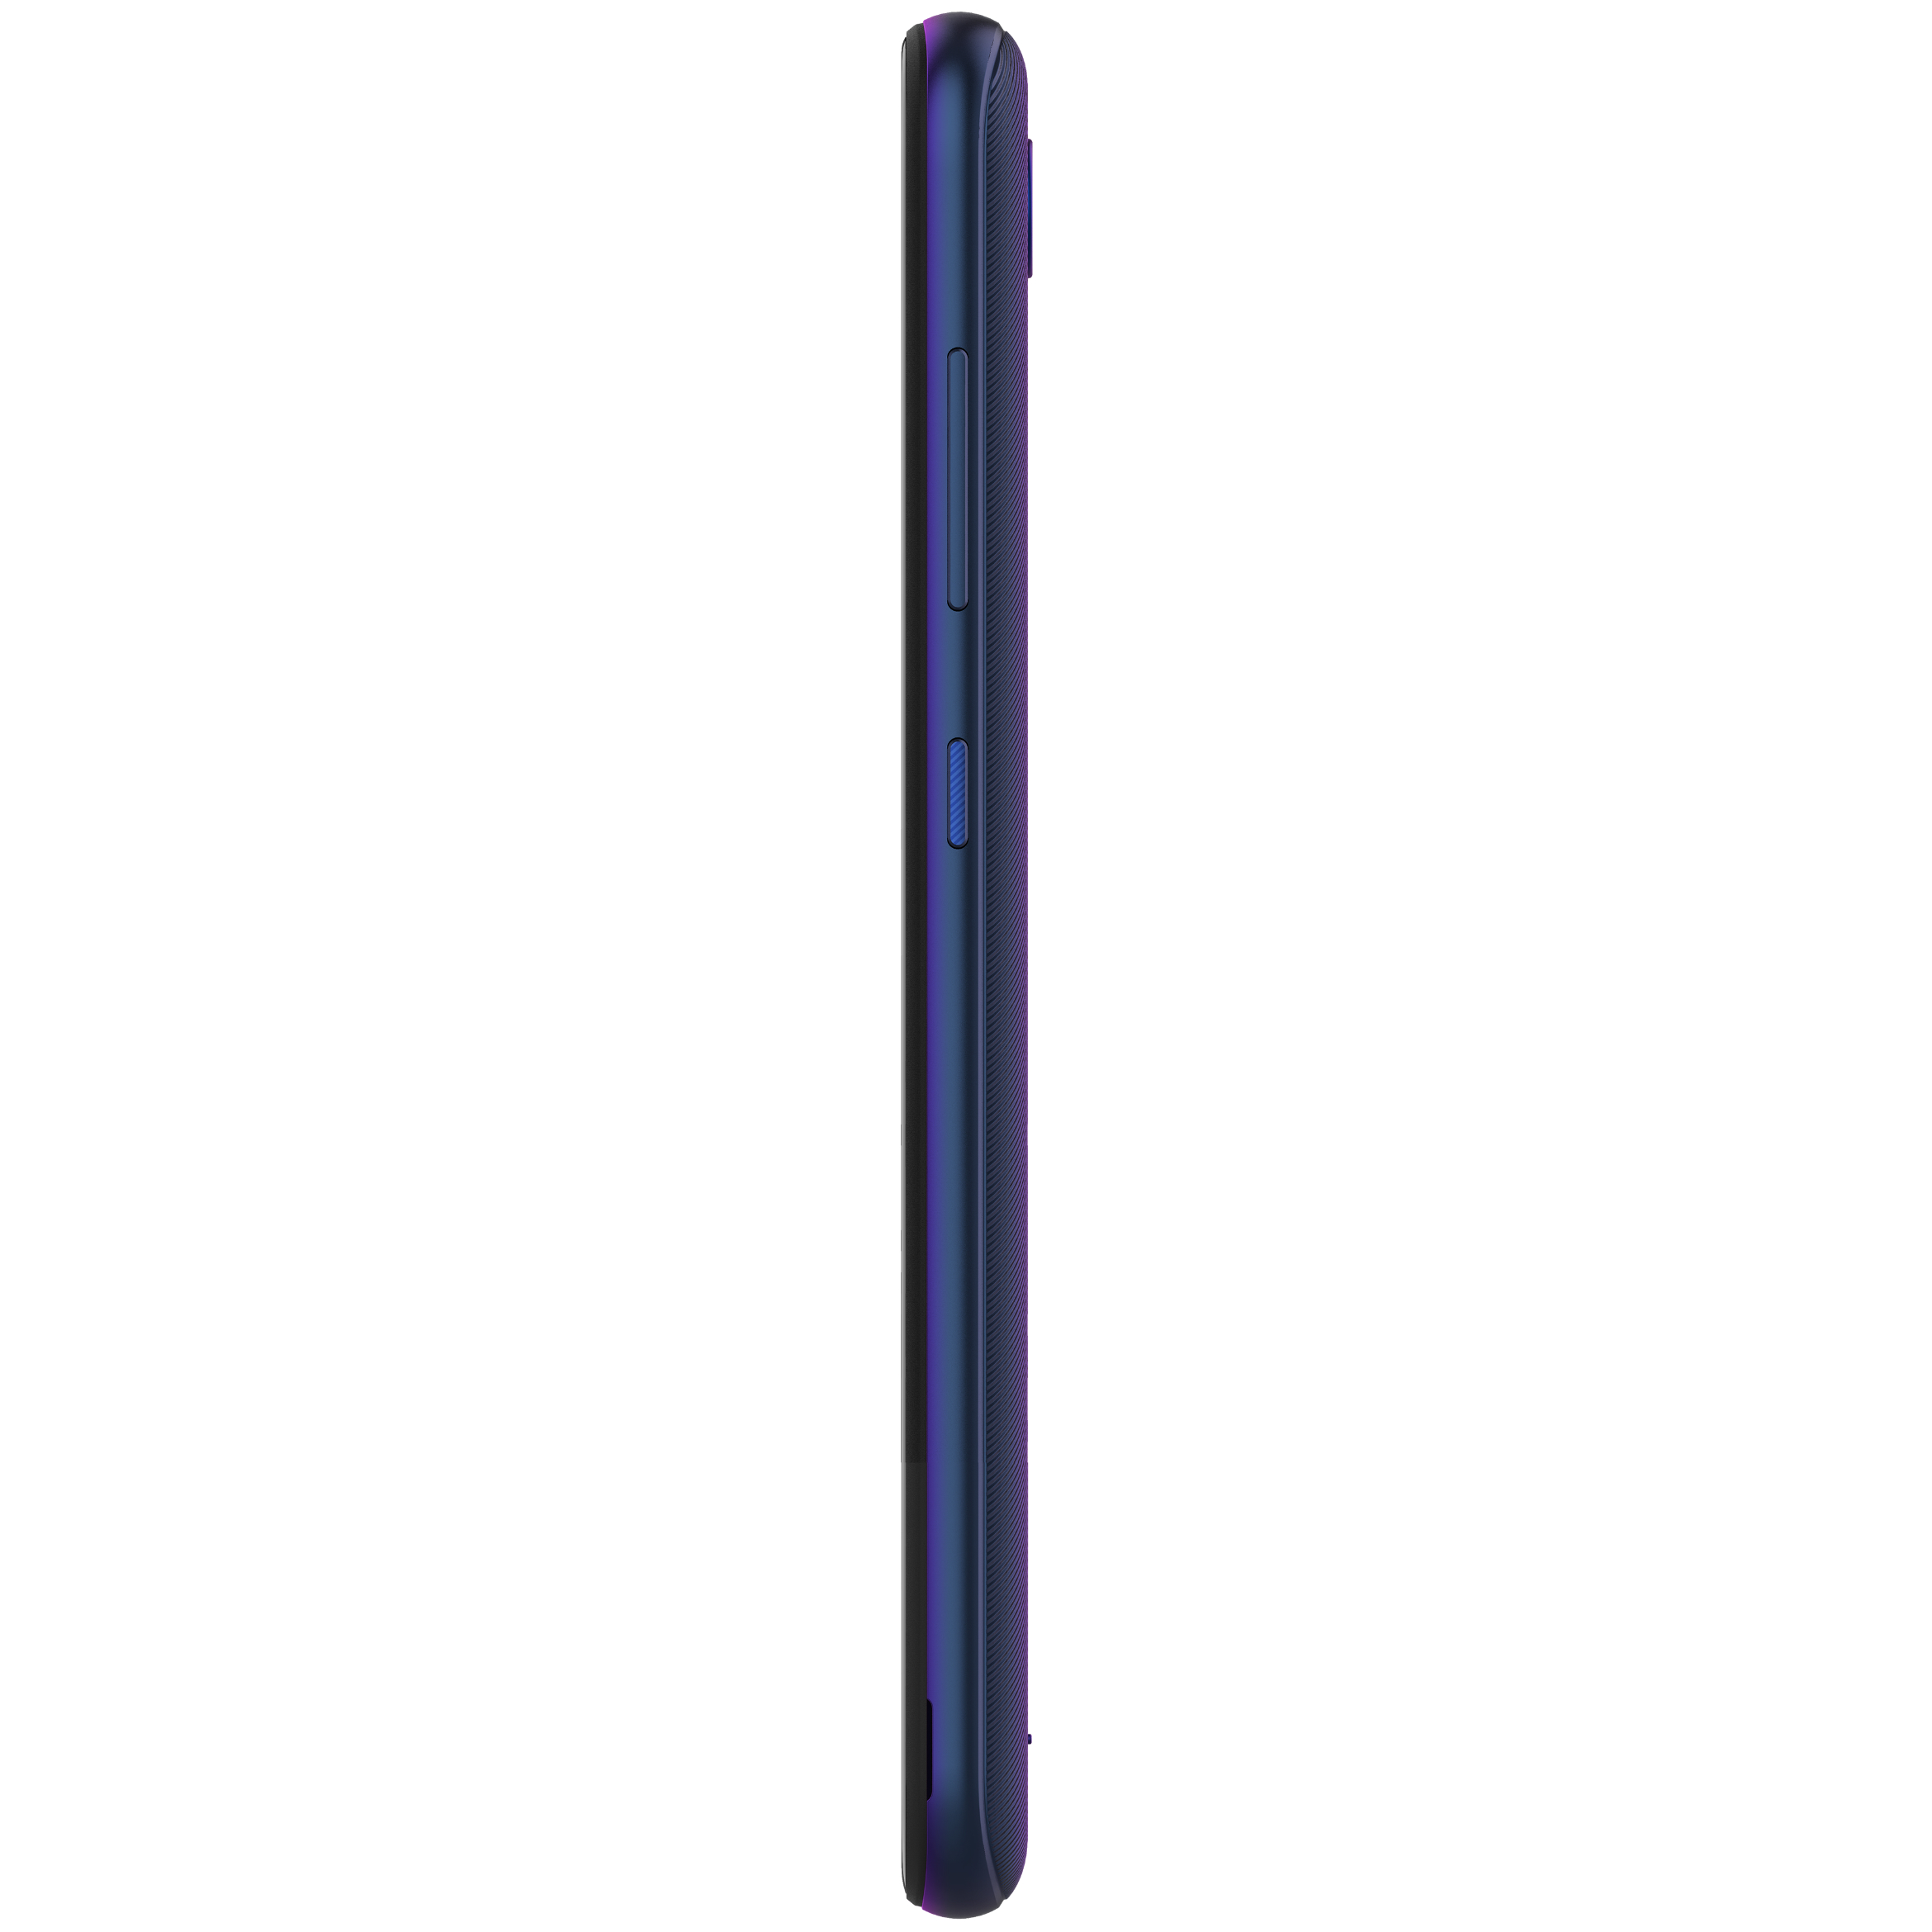 AT&T Calypso, 16GB, Chameleon Blue - Prepaid Smartphone - image 15 of 19